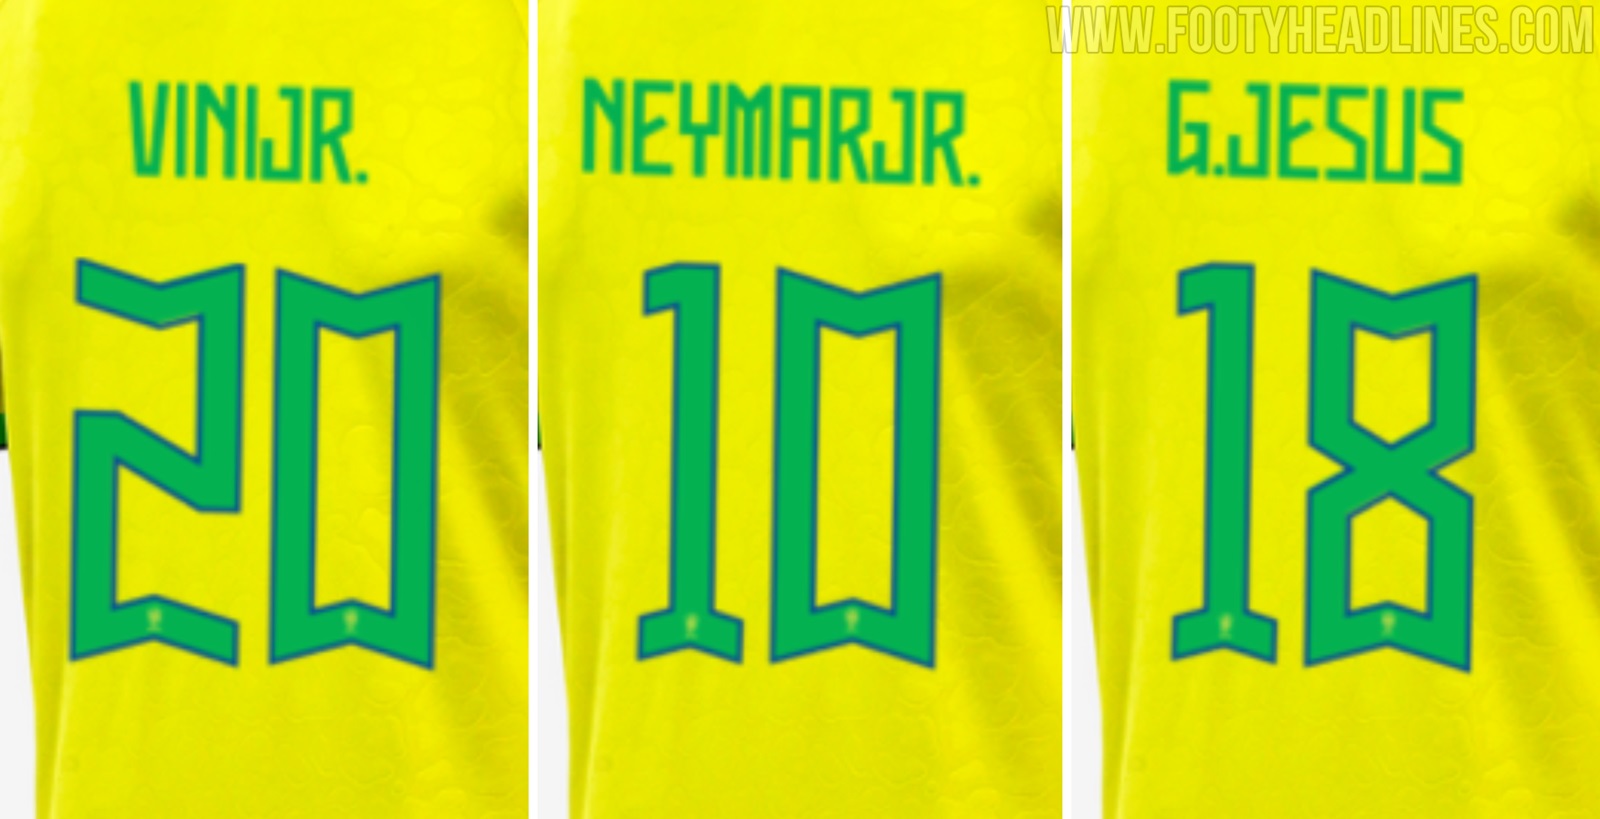 Brasilien Trikot WM 2022 Neymar Jr 10 World Cup Auswärtstrikot